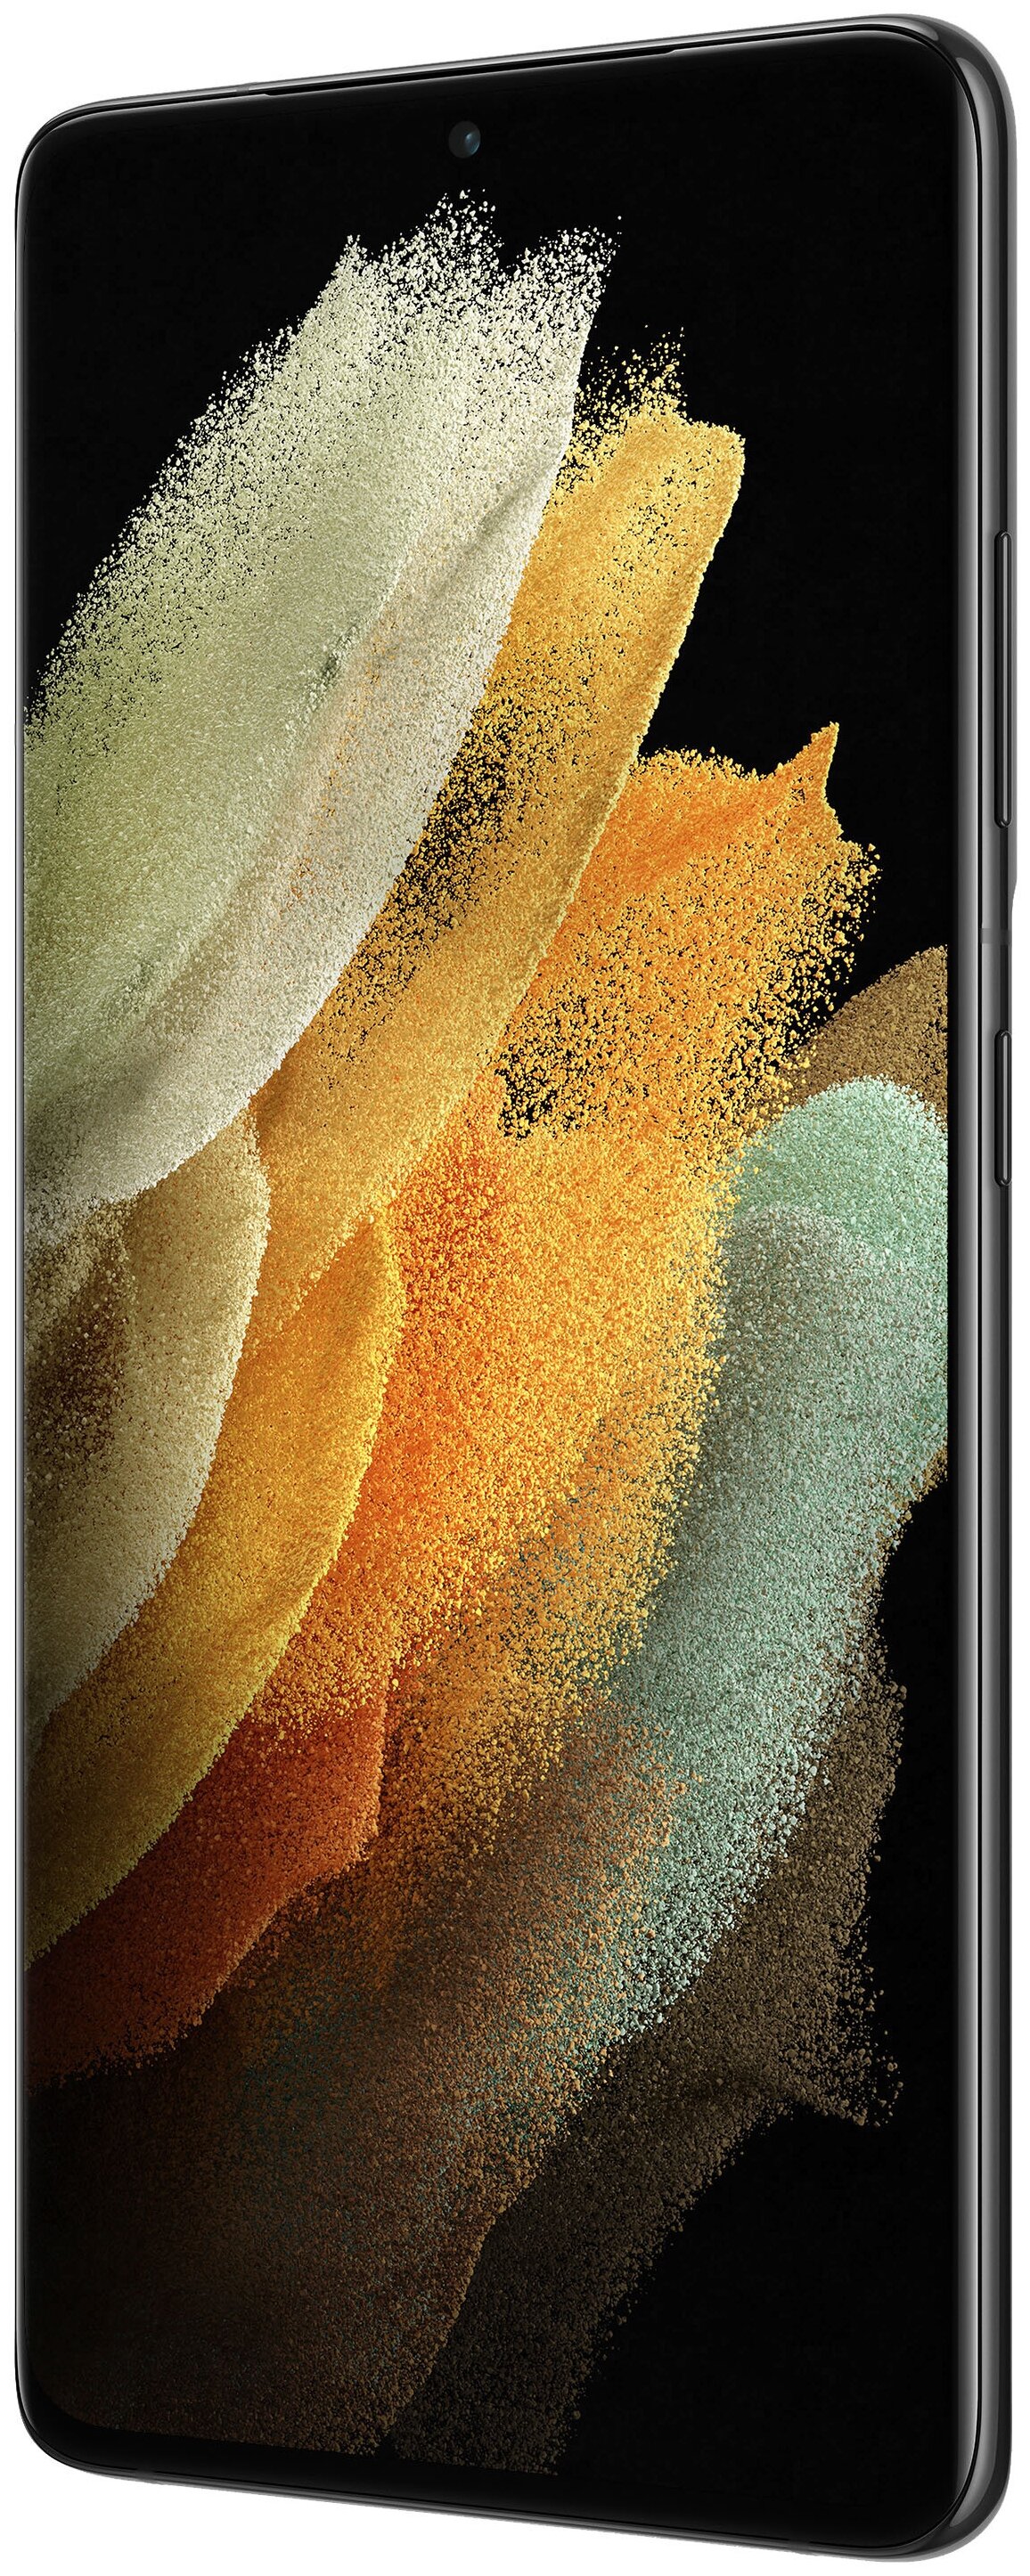 Samsung Galaxy S21 Ultra 5G 12/128GB - вес: 228 г